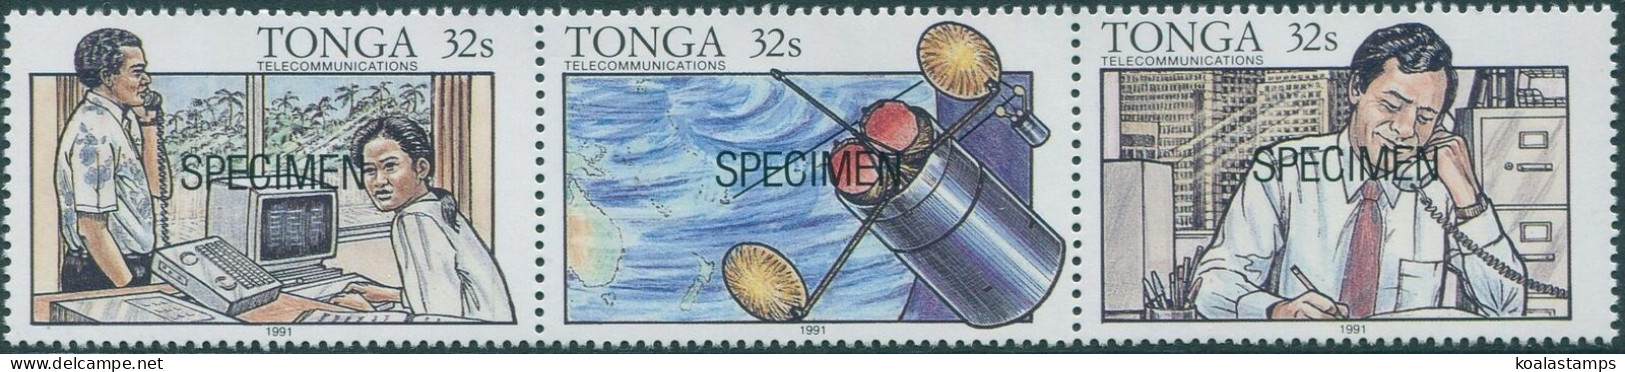 Tonga 1991 SG1139a Telecommunications SPECIMEN Strip MNH - Tonga (1970-...)